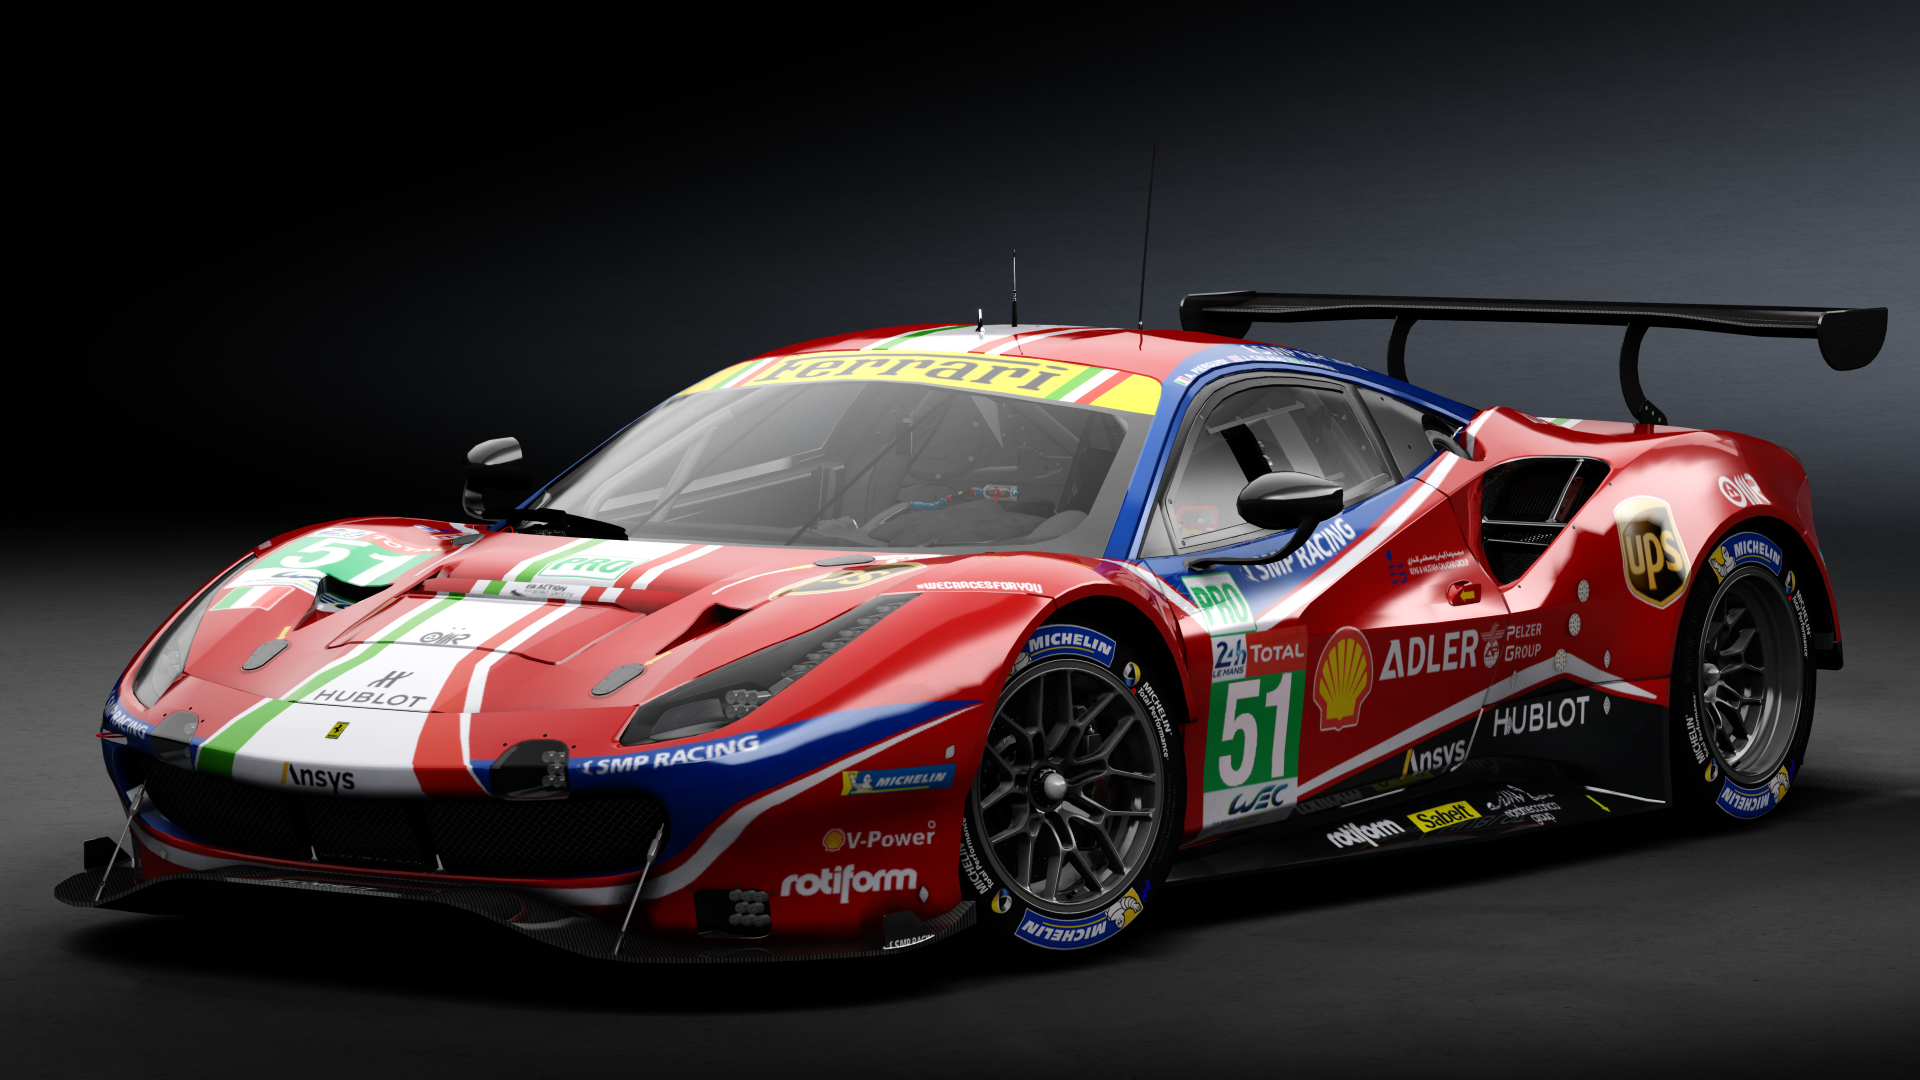 2018 Ferrari 488 GTE Evo Le Mans Spec [Michelotto], skin 2020 #51 AF Corse LM24